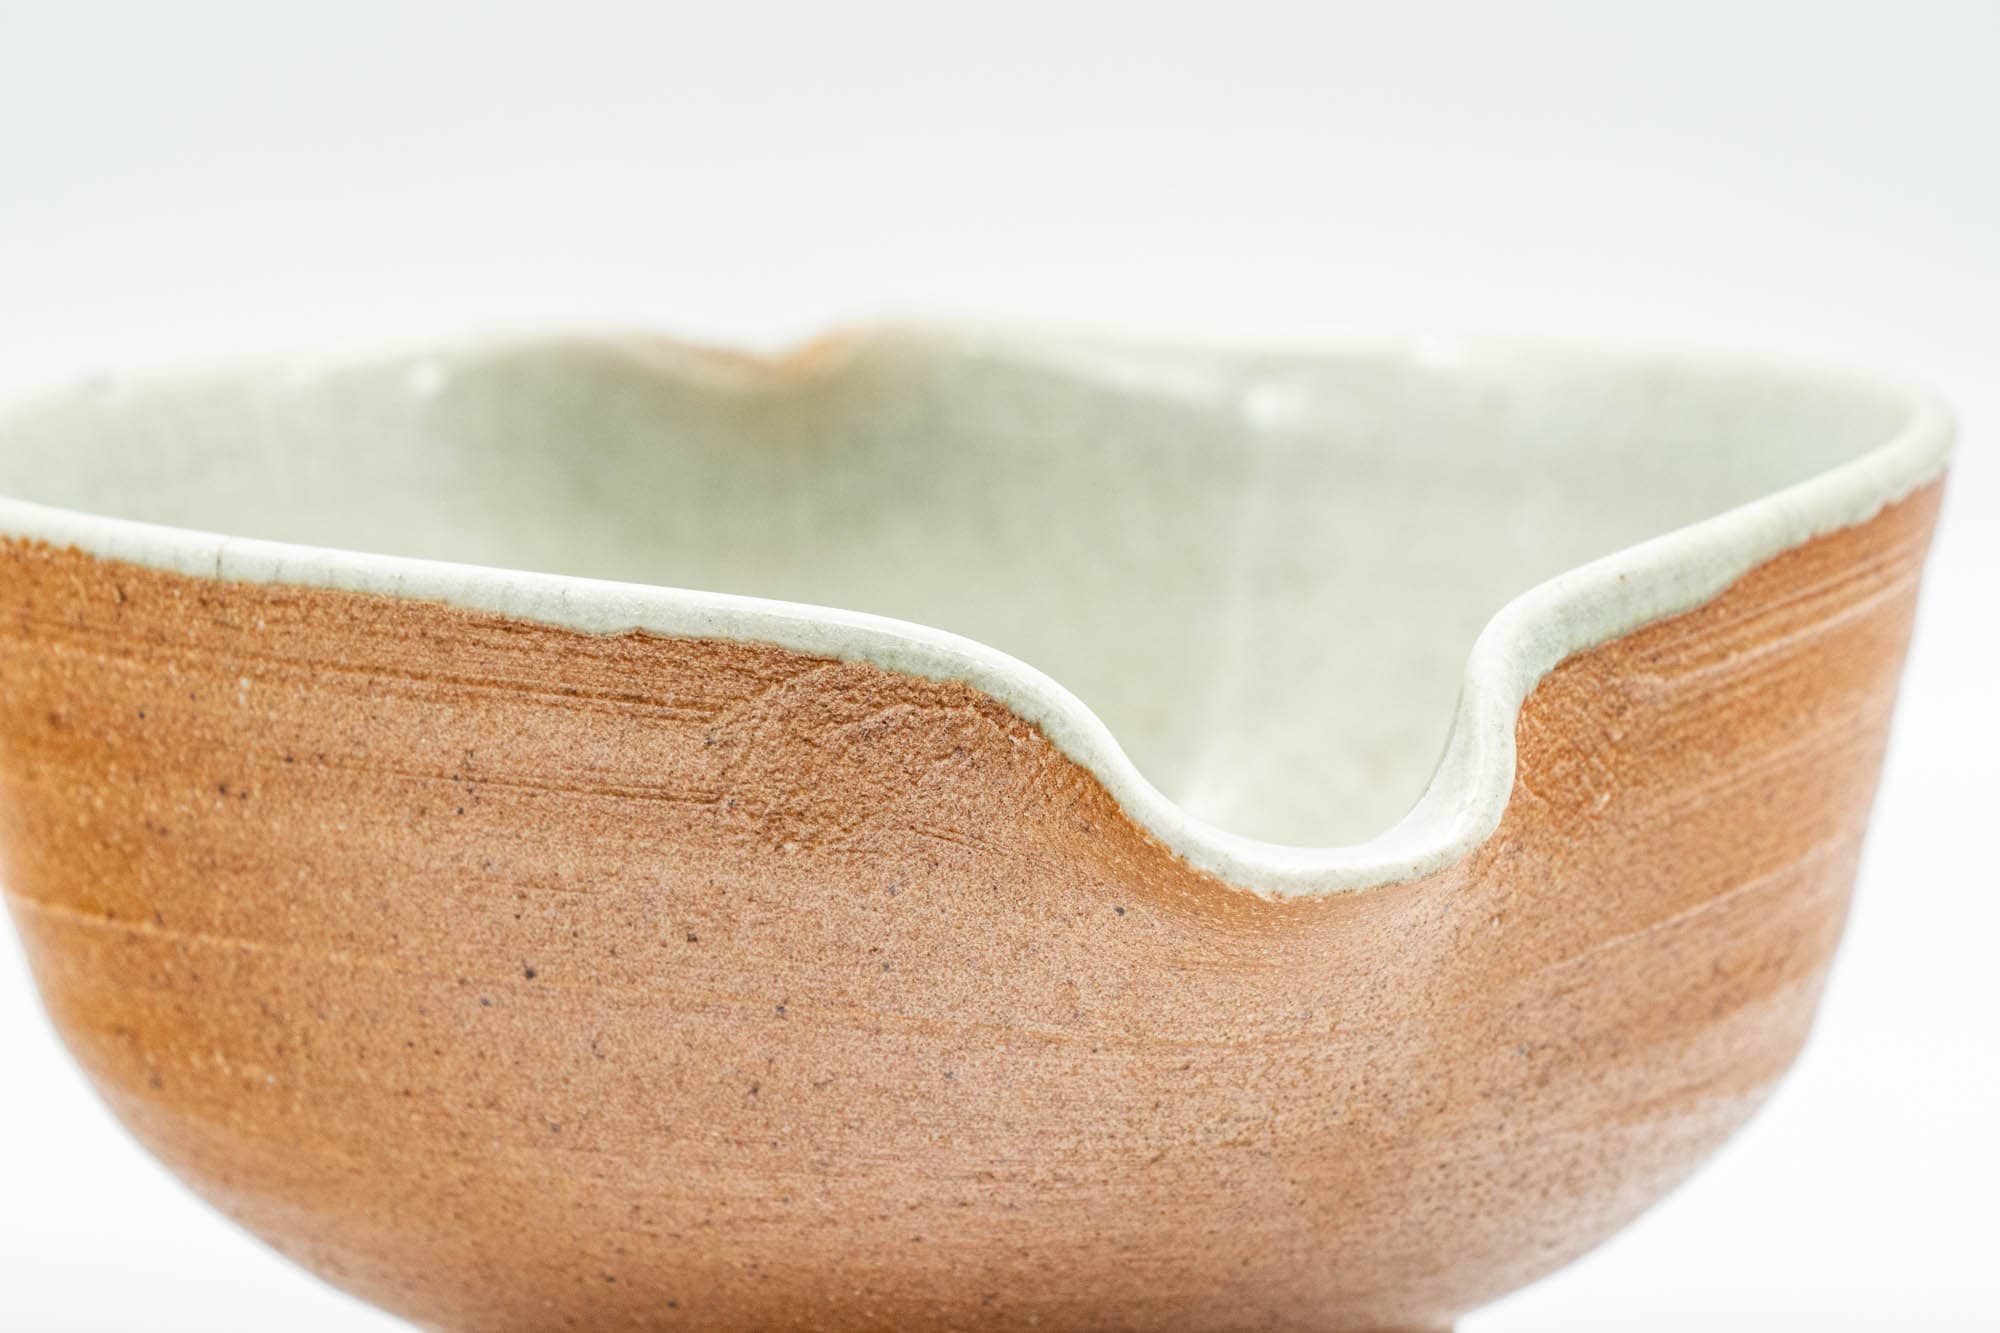 Japanese Katakuchi - Celadon Glazed Stoneware Water Cooler - 150ml - Tezumi